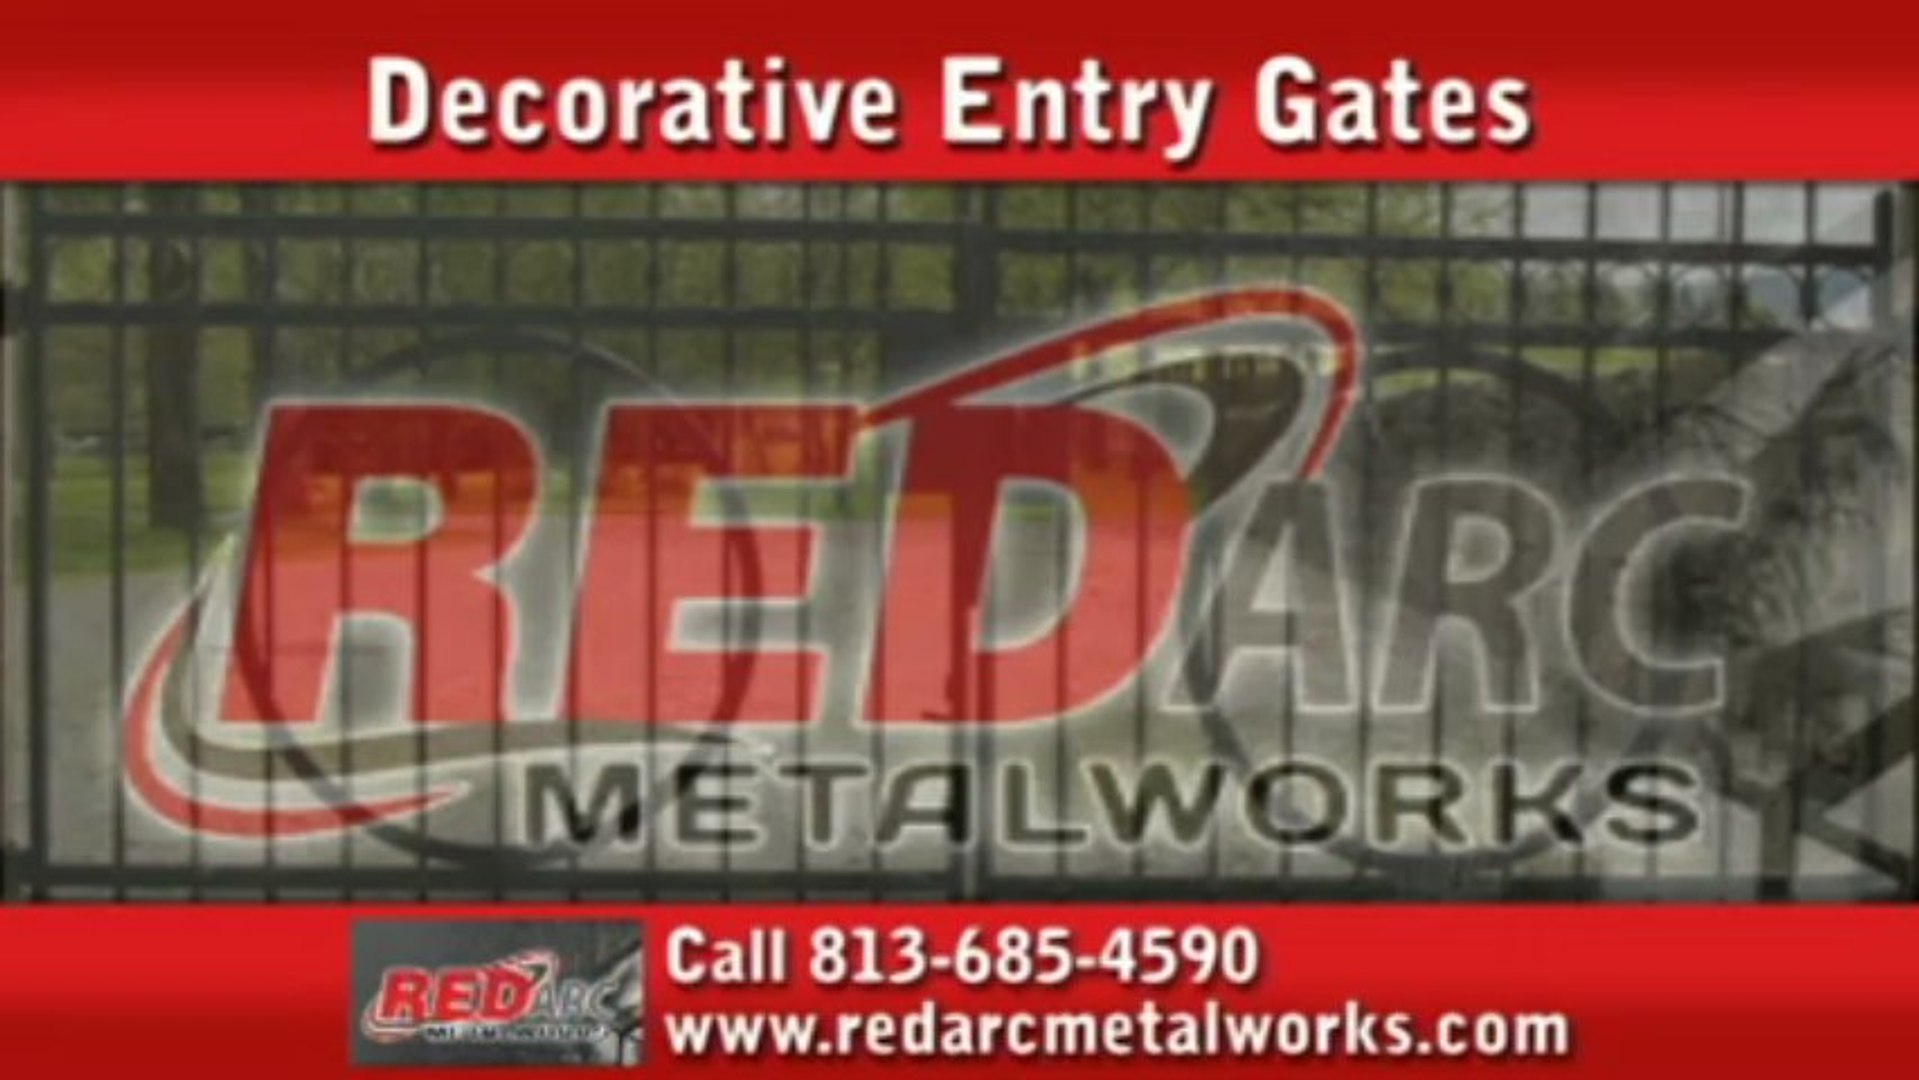 ⁣Decorative Entry Gates in Brandon, FL - Call 813-685-4590